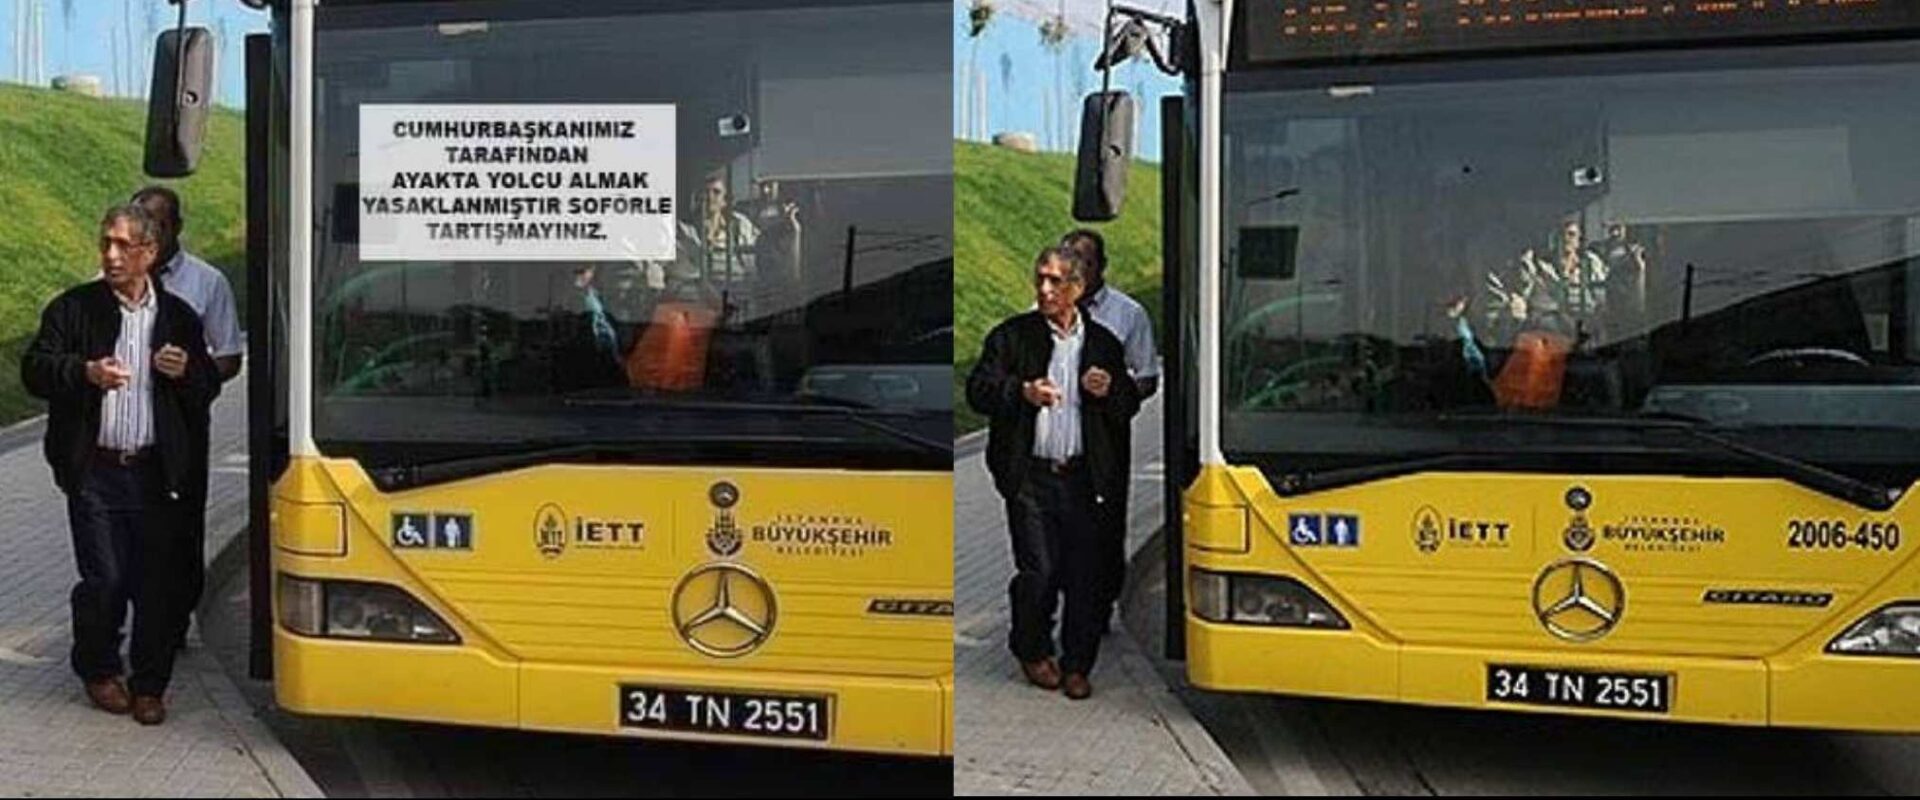 istanbul otobüs afiş